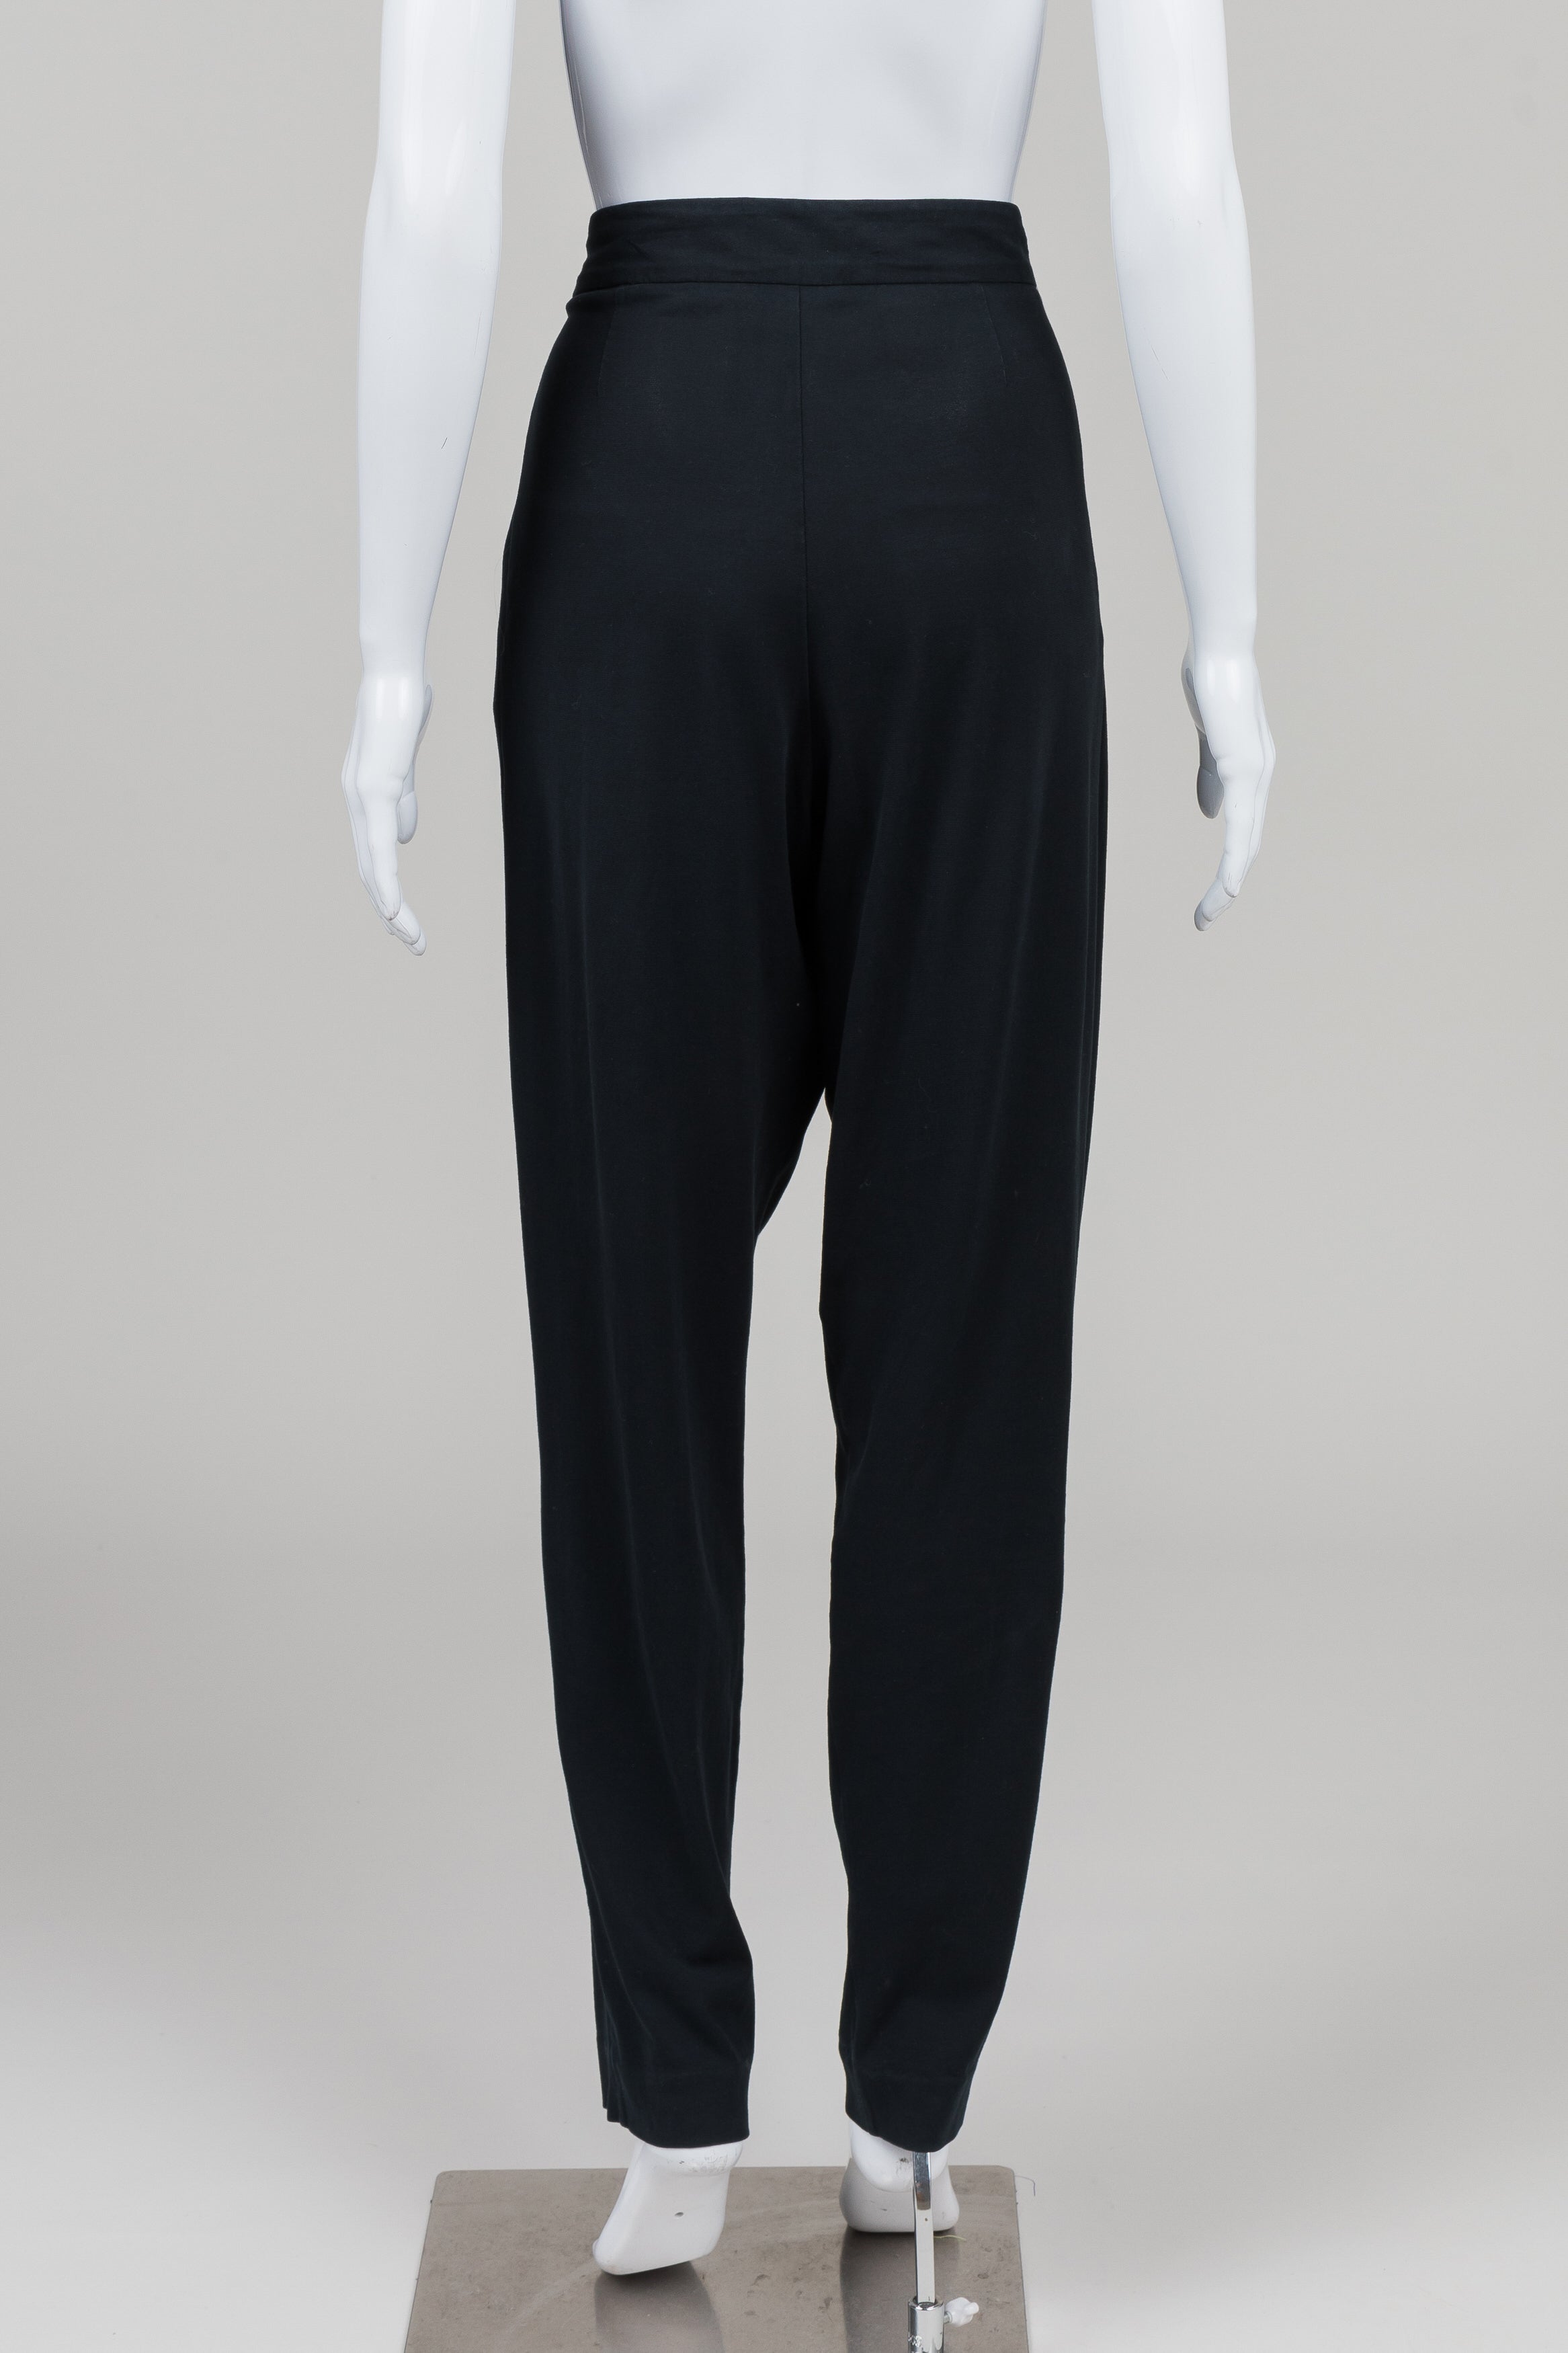 Moschino Black Soft Pants w/ Ribbon Belt (8)